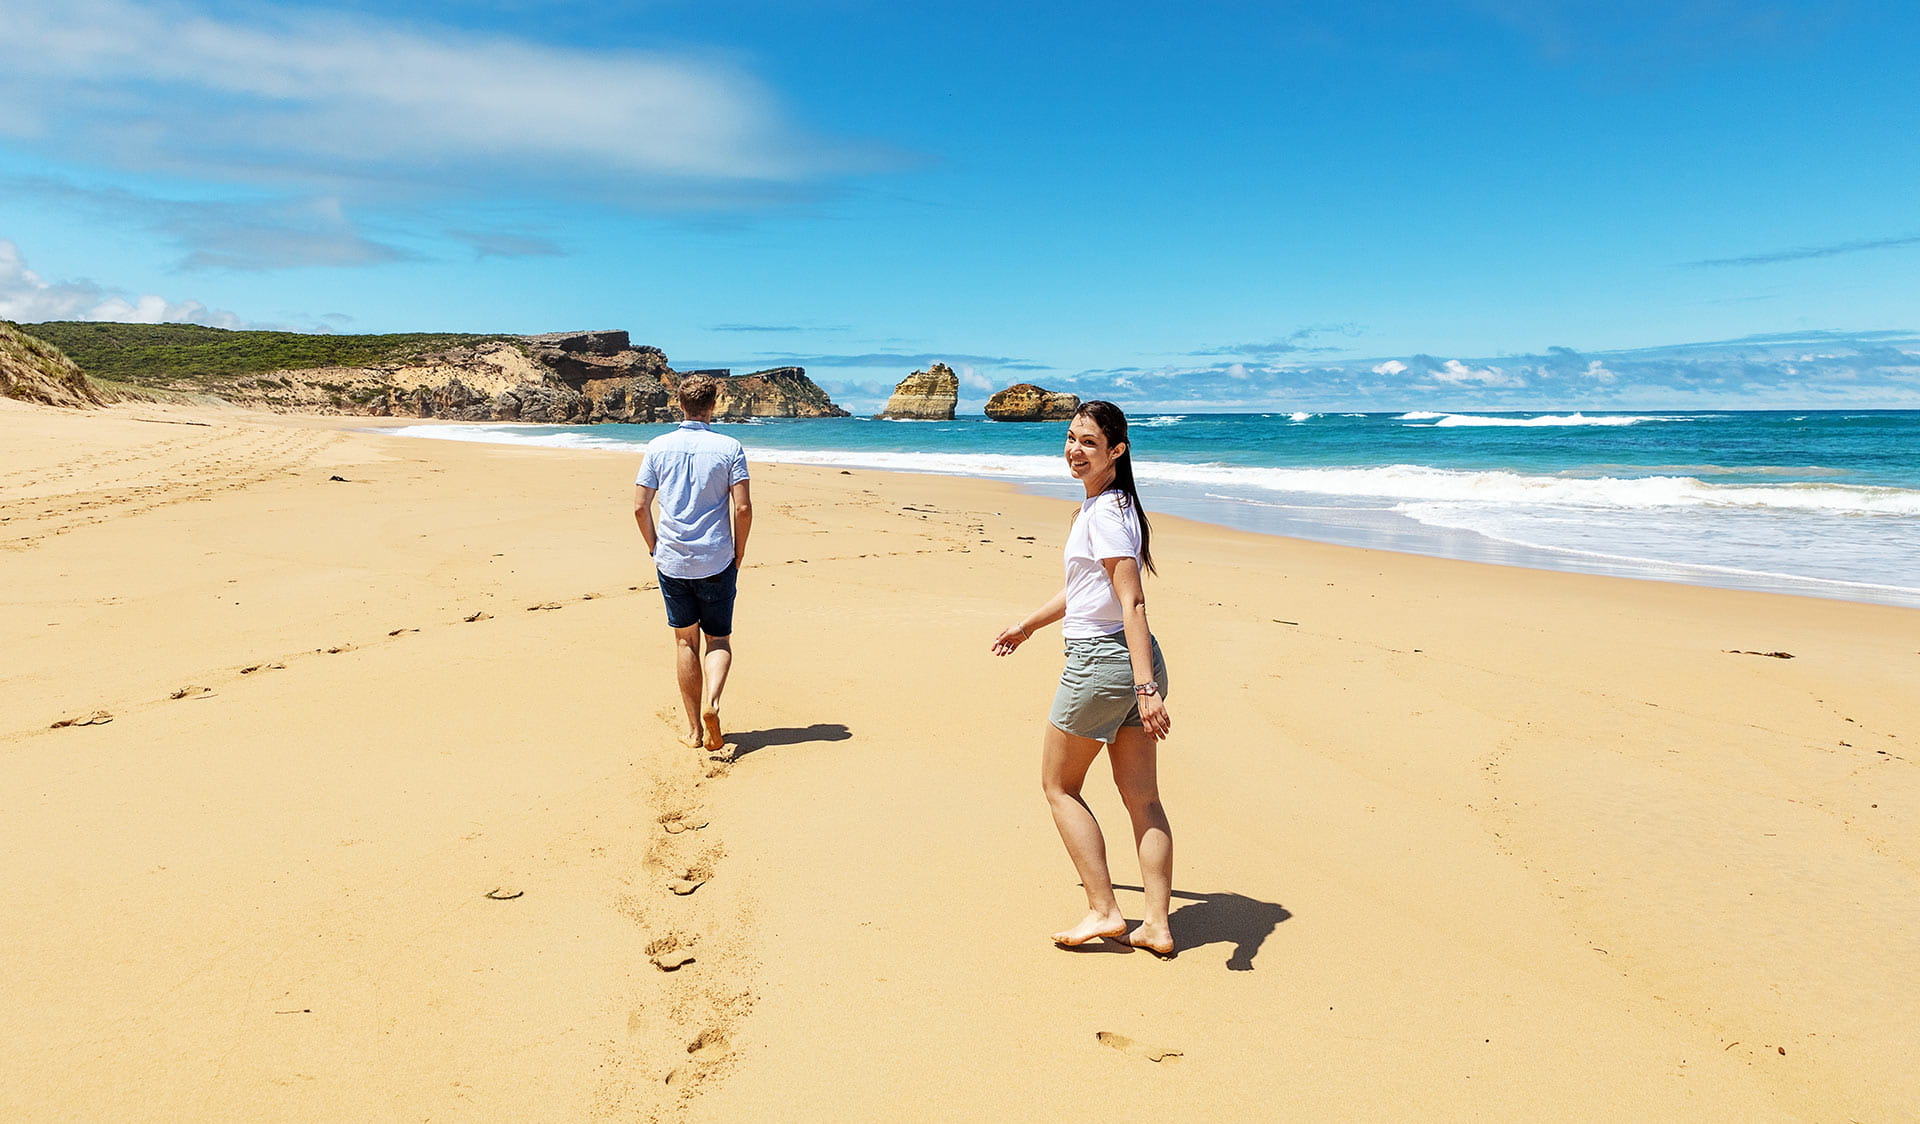 A couple walk along a beach at the Bay Islands